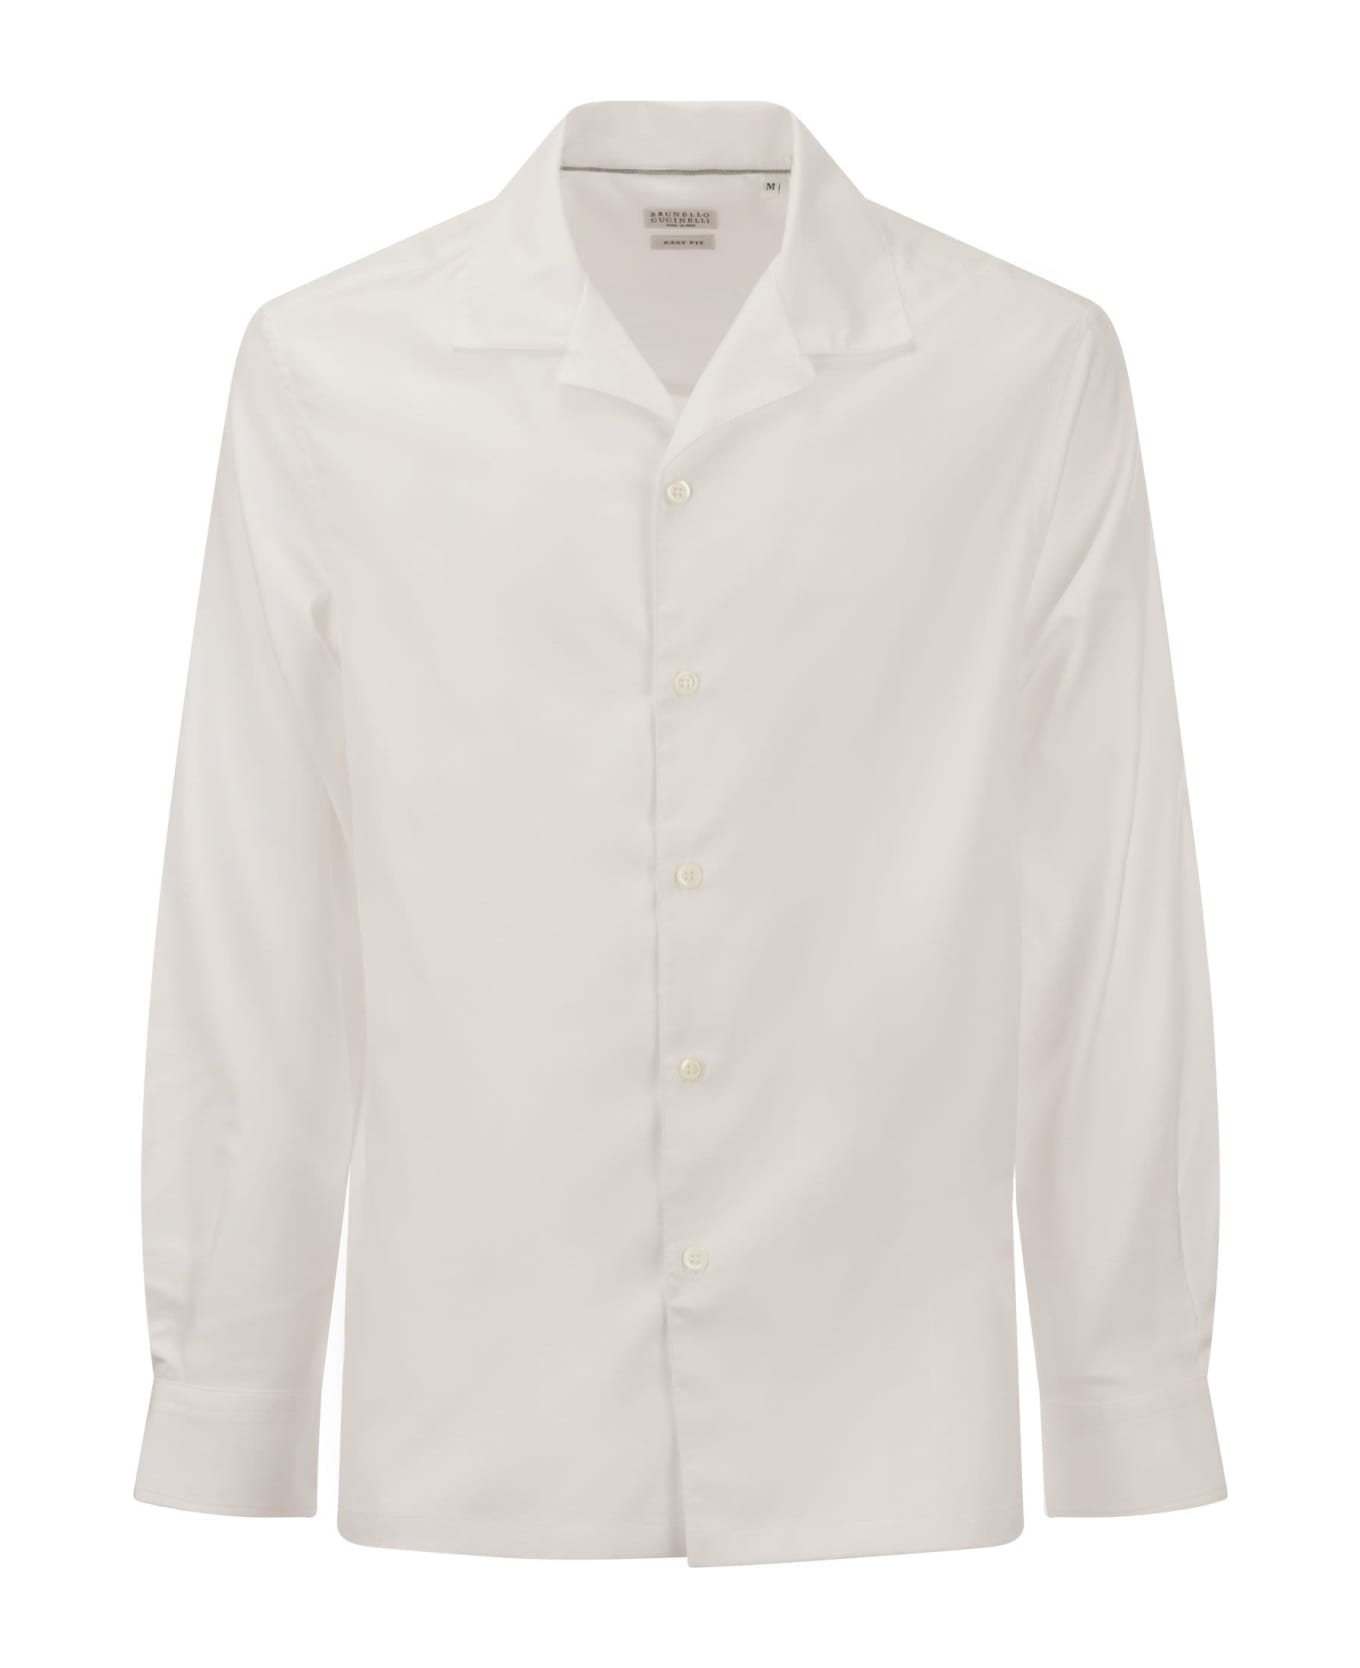 Brunello Cucinelli Classic Easy Fit Cotton Shirt - White